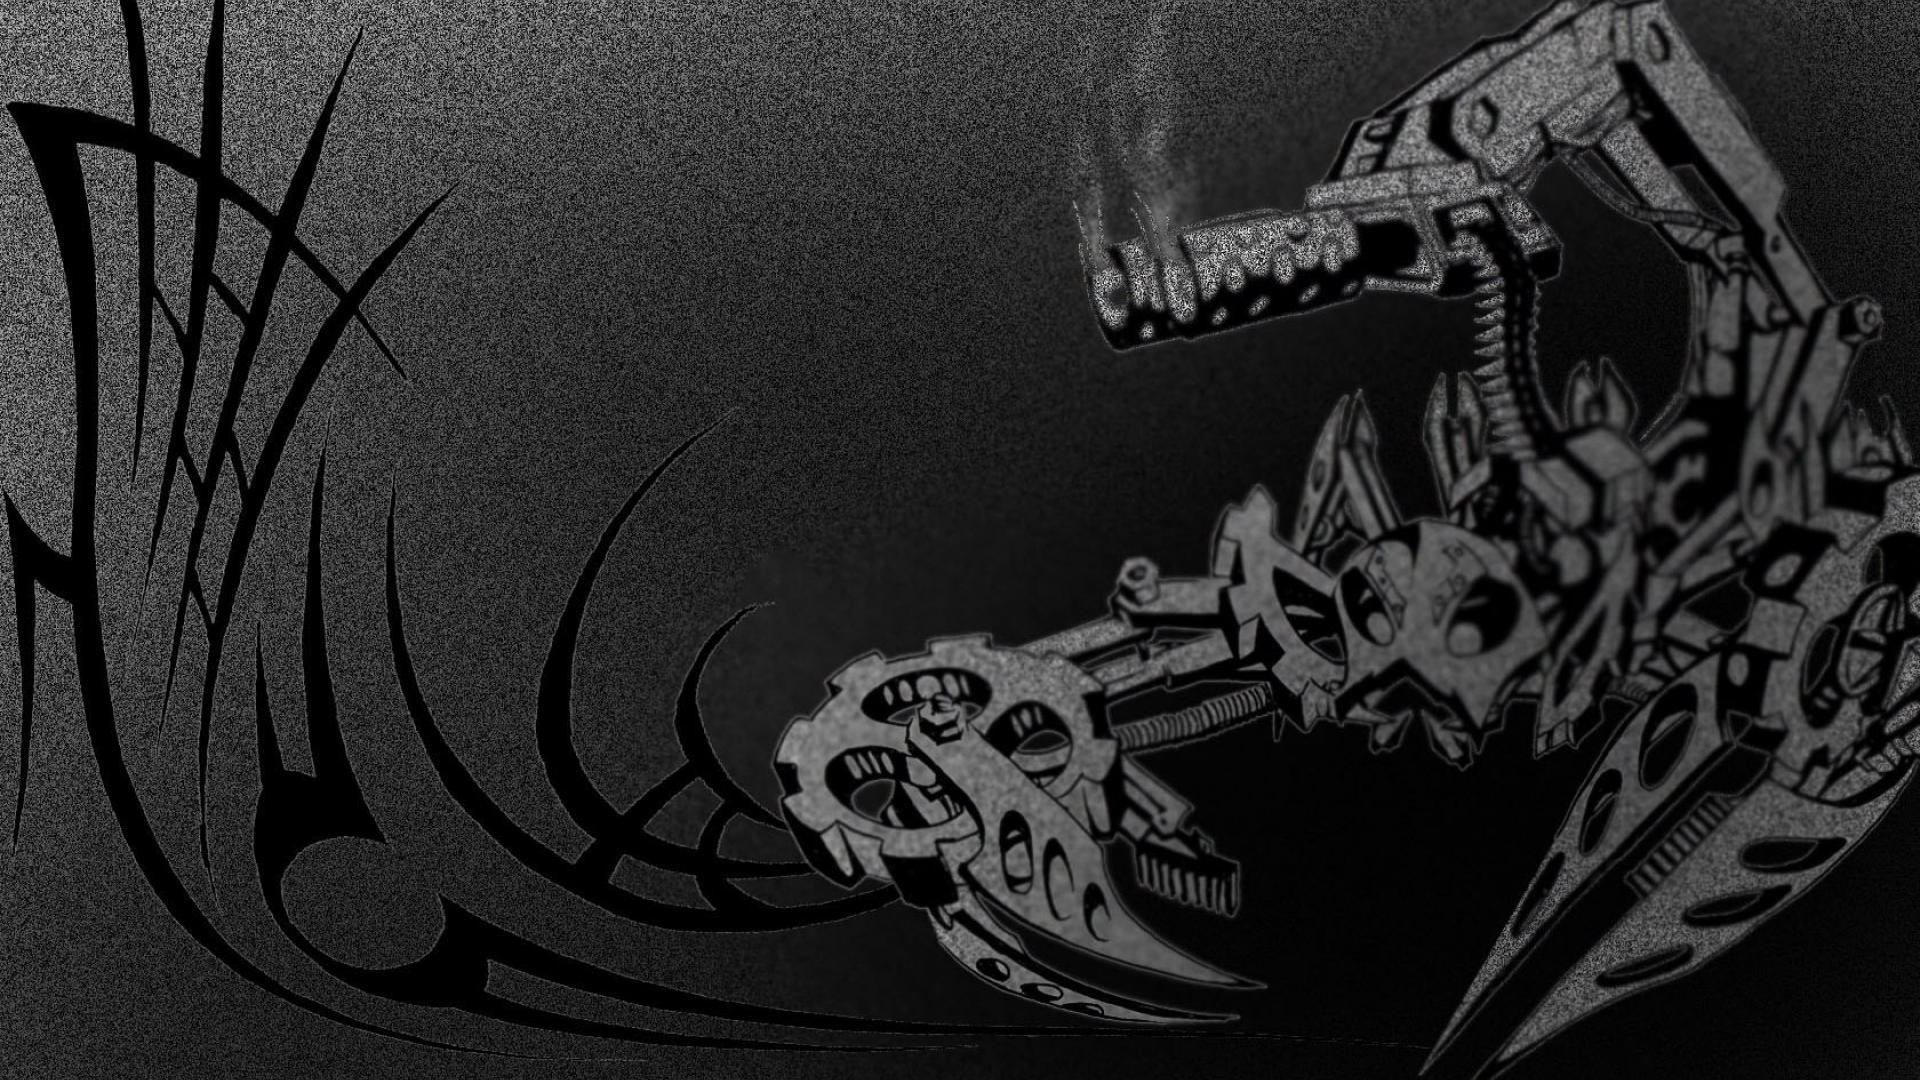 black scorpion wallpaper desktop